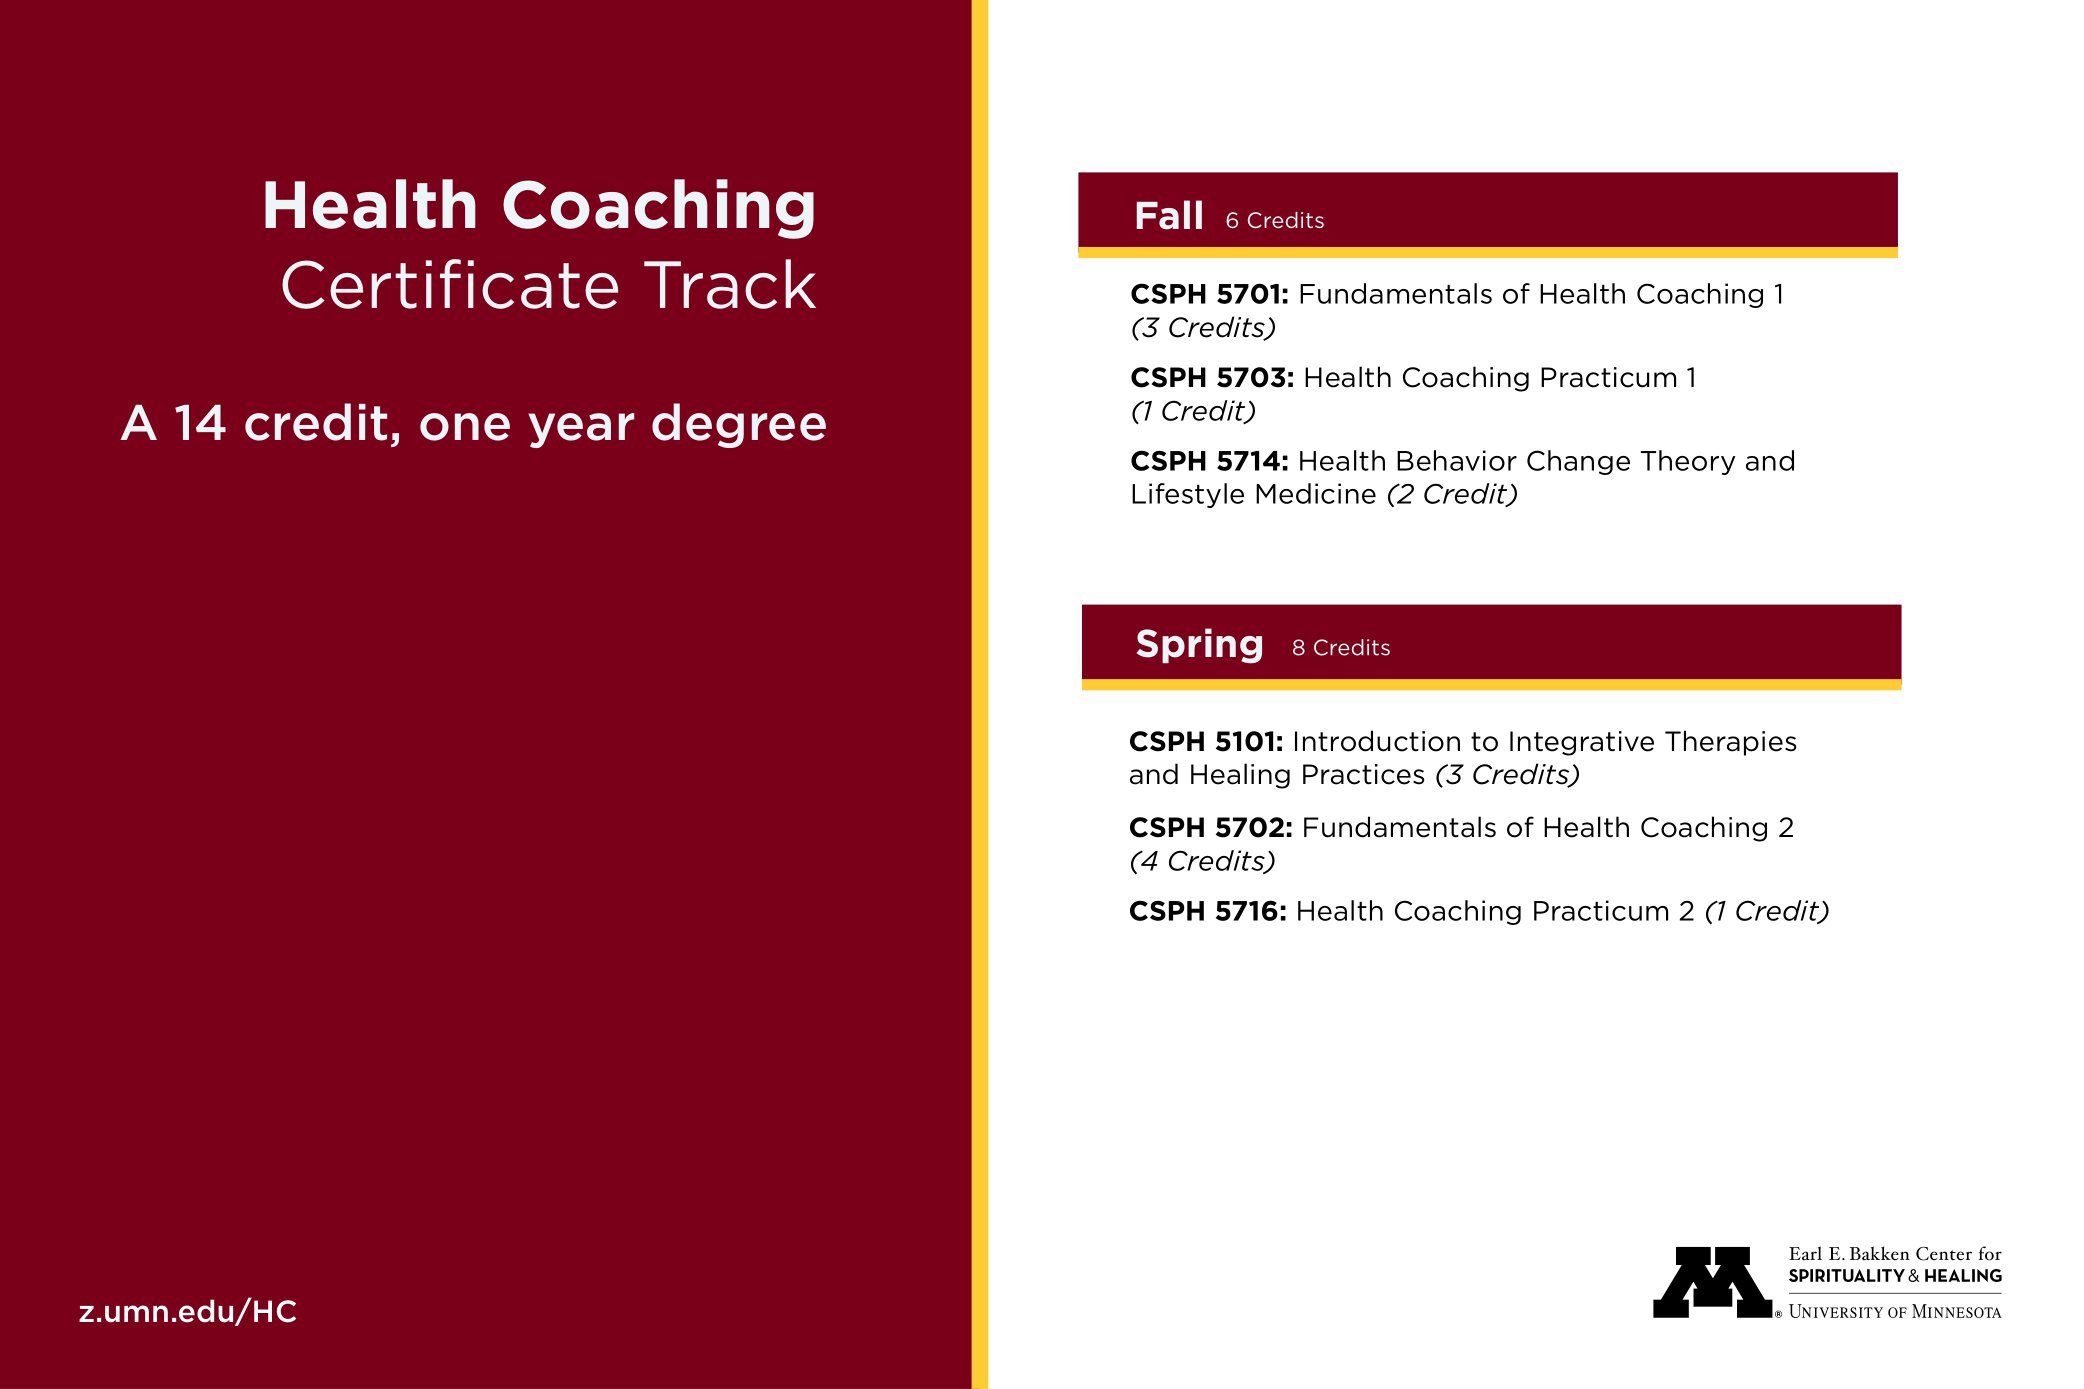 health coaching track resource pdf. Text copied below.